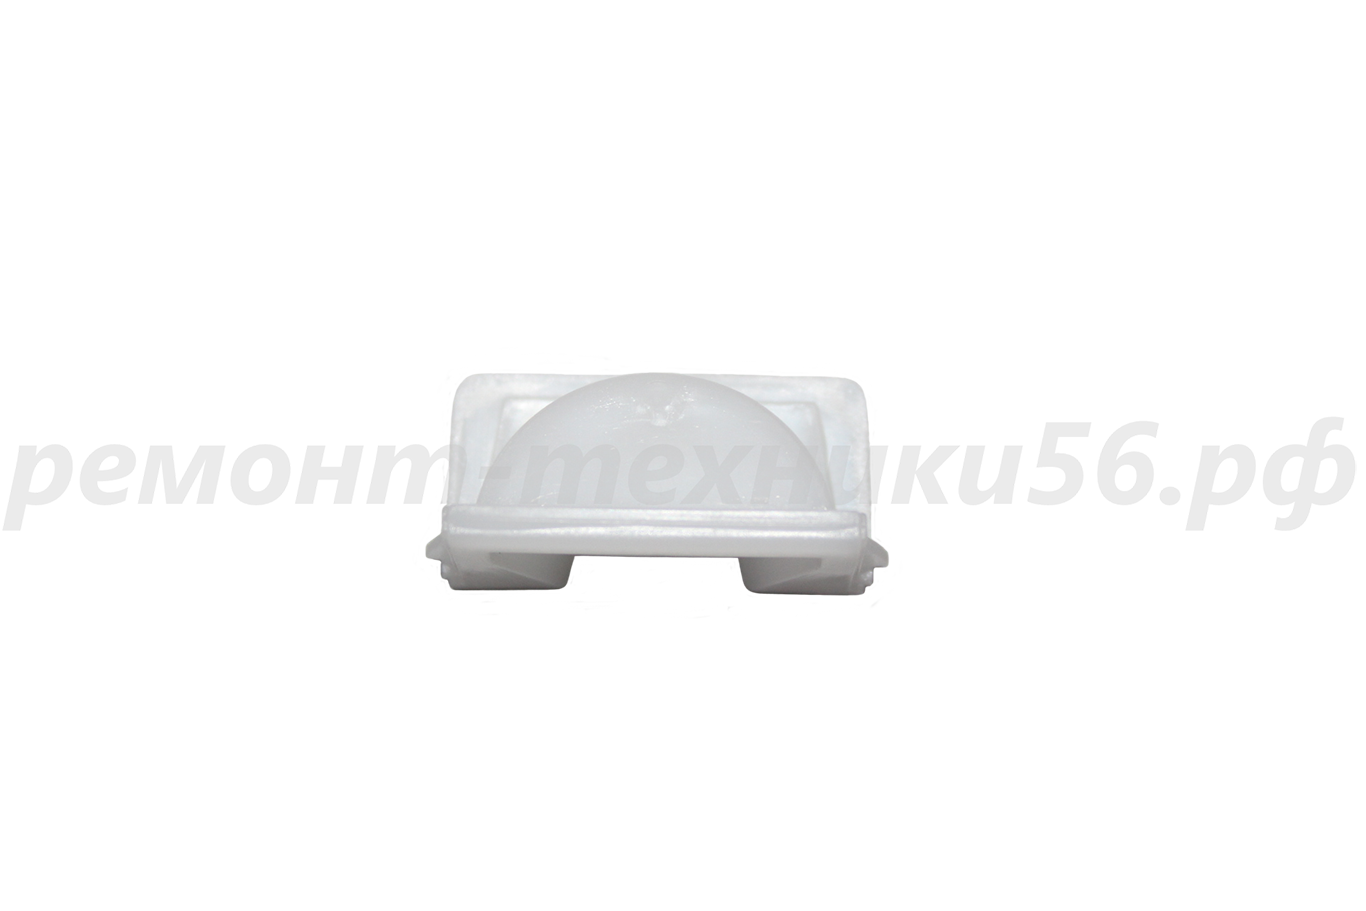 Подшипник скольжения передний Electrolux EHAW - 6515 (white) по лучшей цене фото5